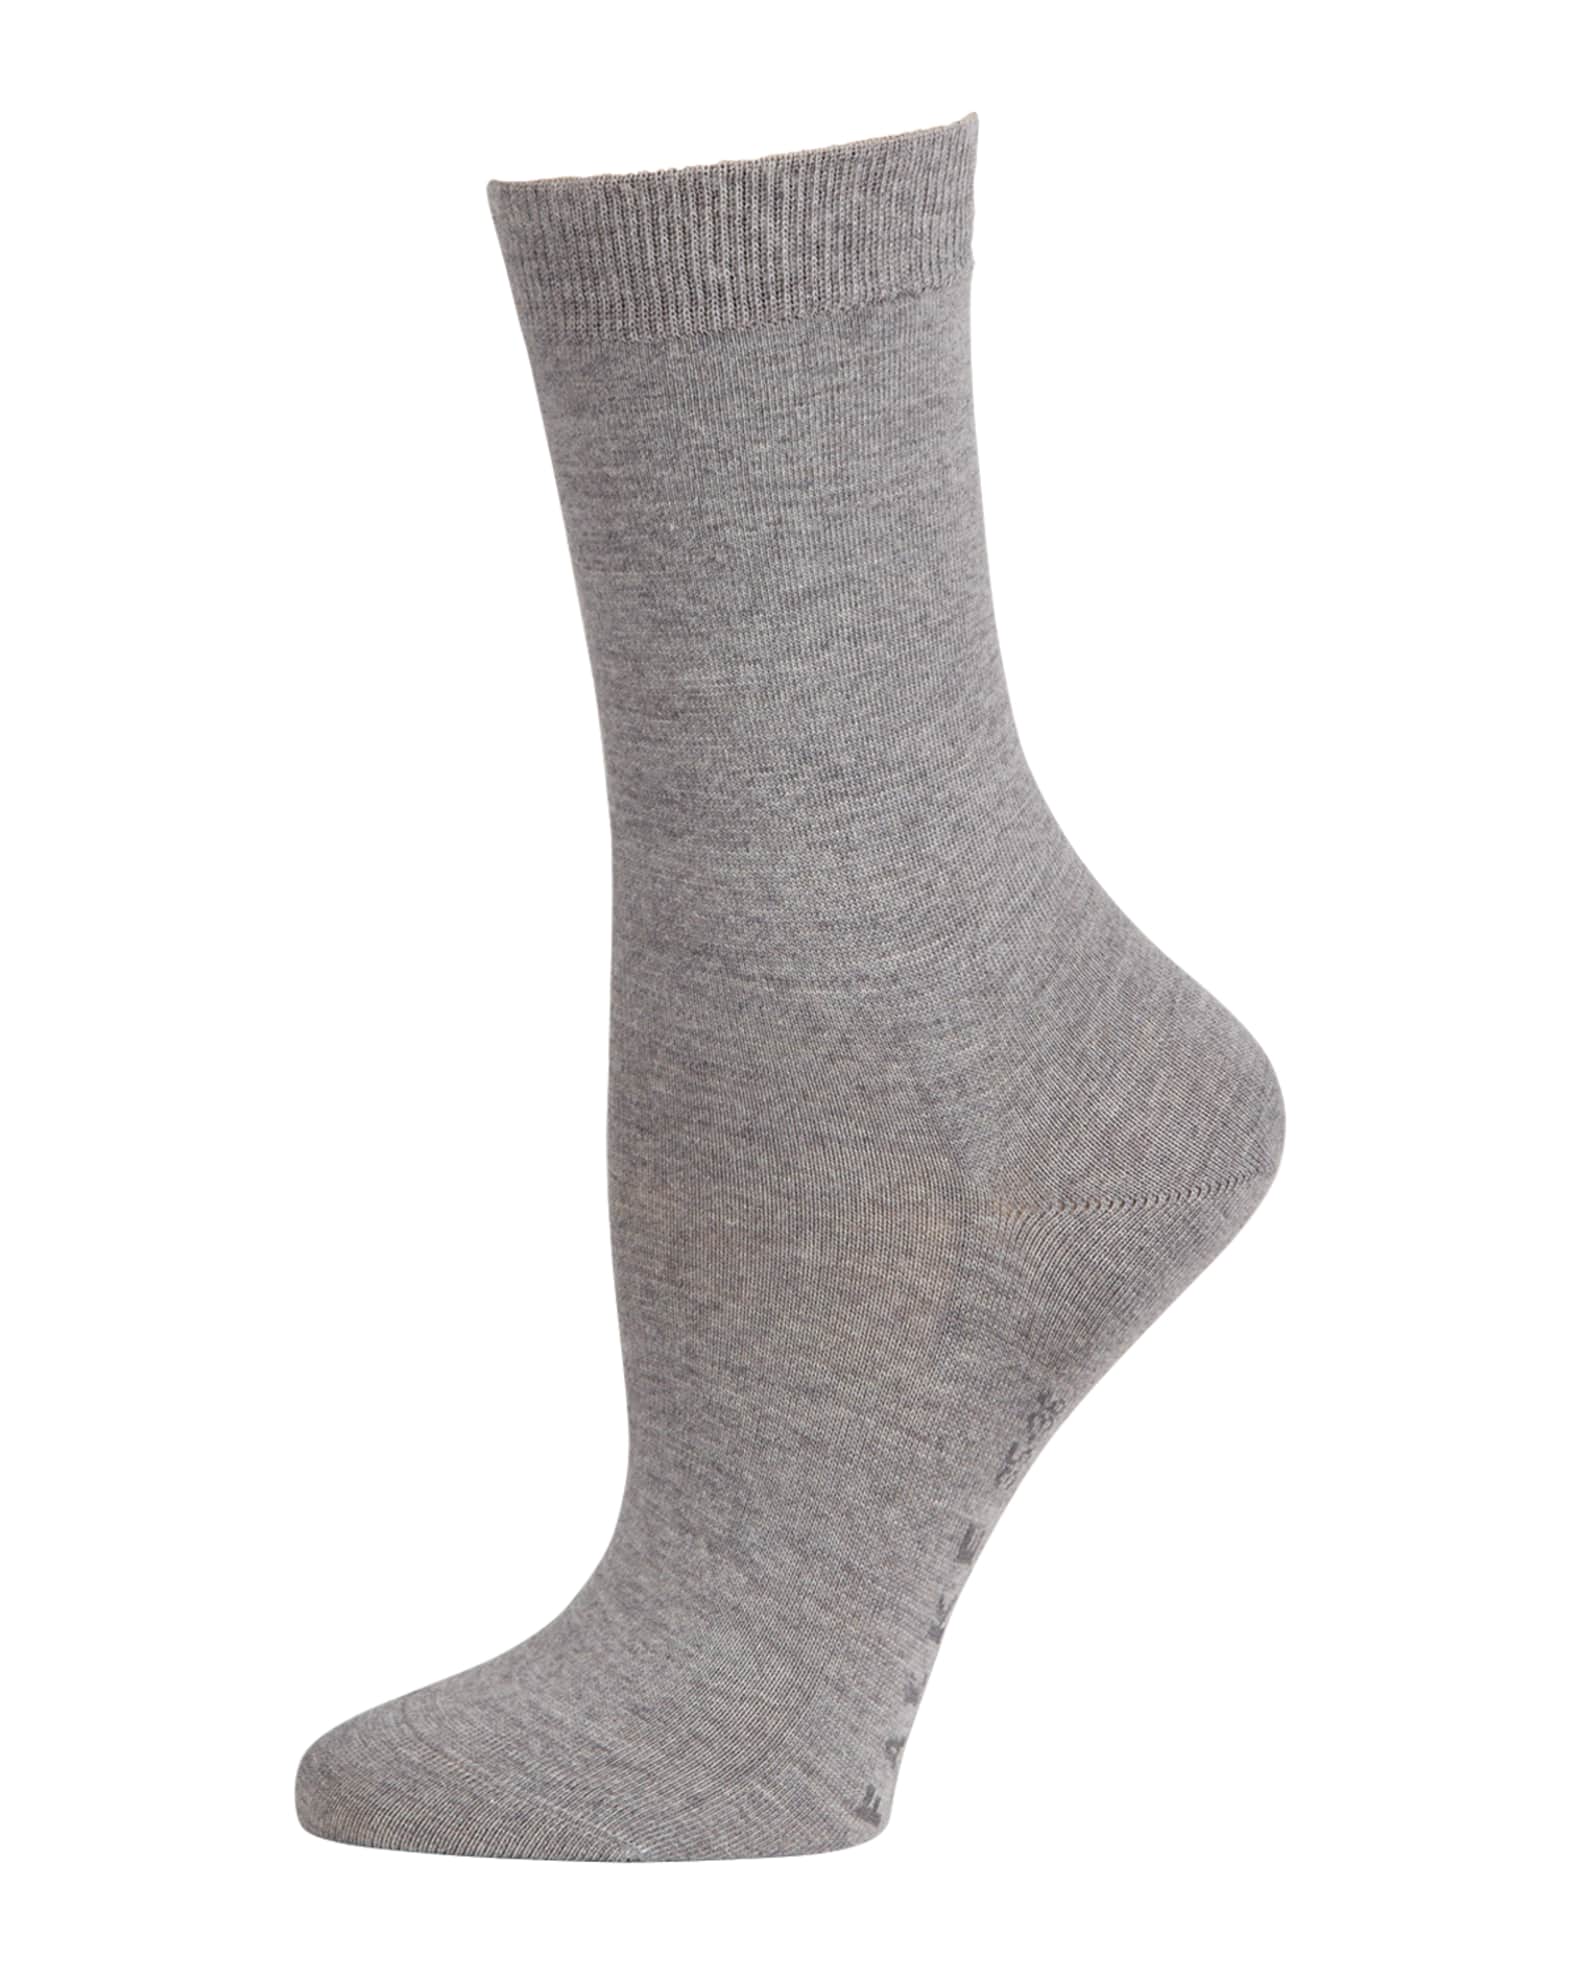 Falke City Soft Wool-Blend Socks | Neiman Marcus